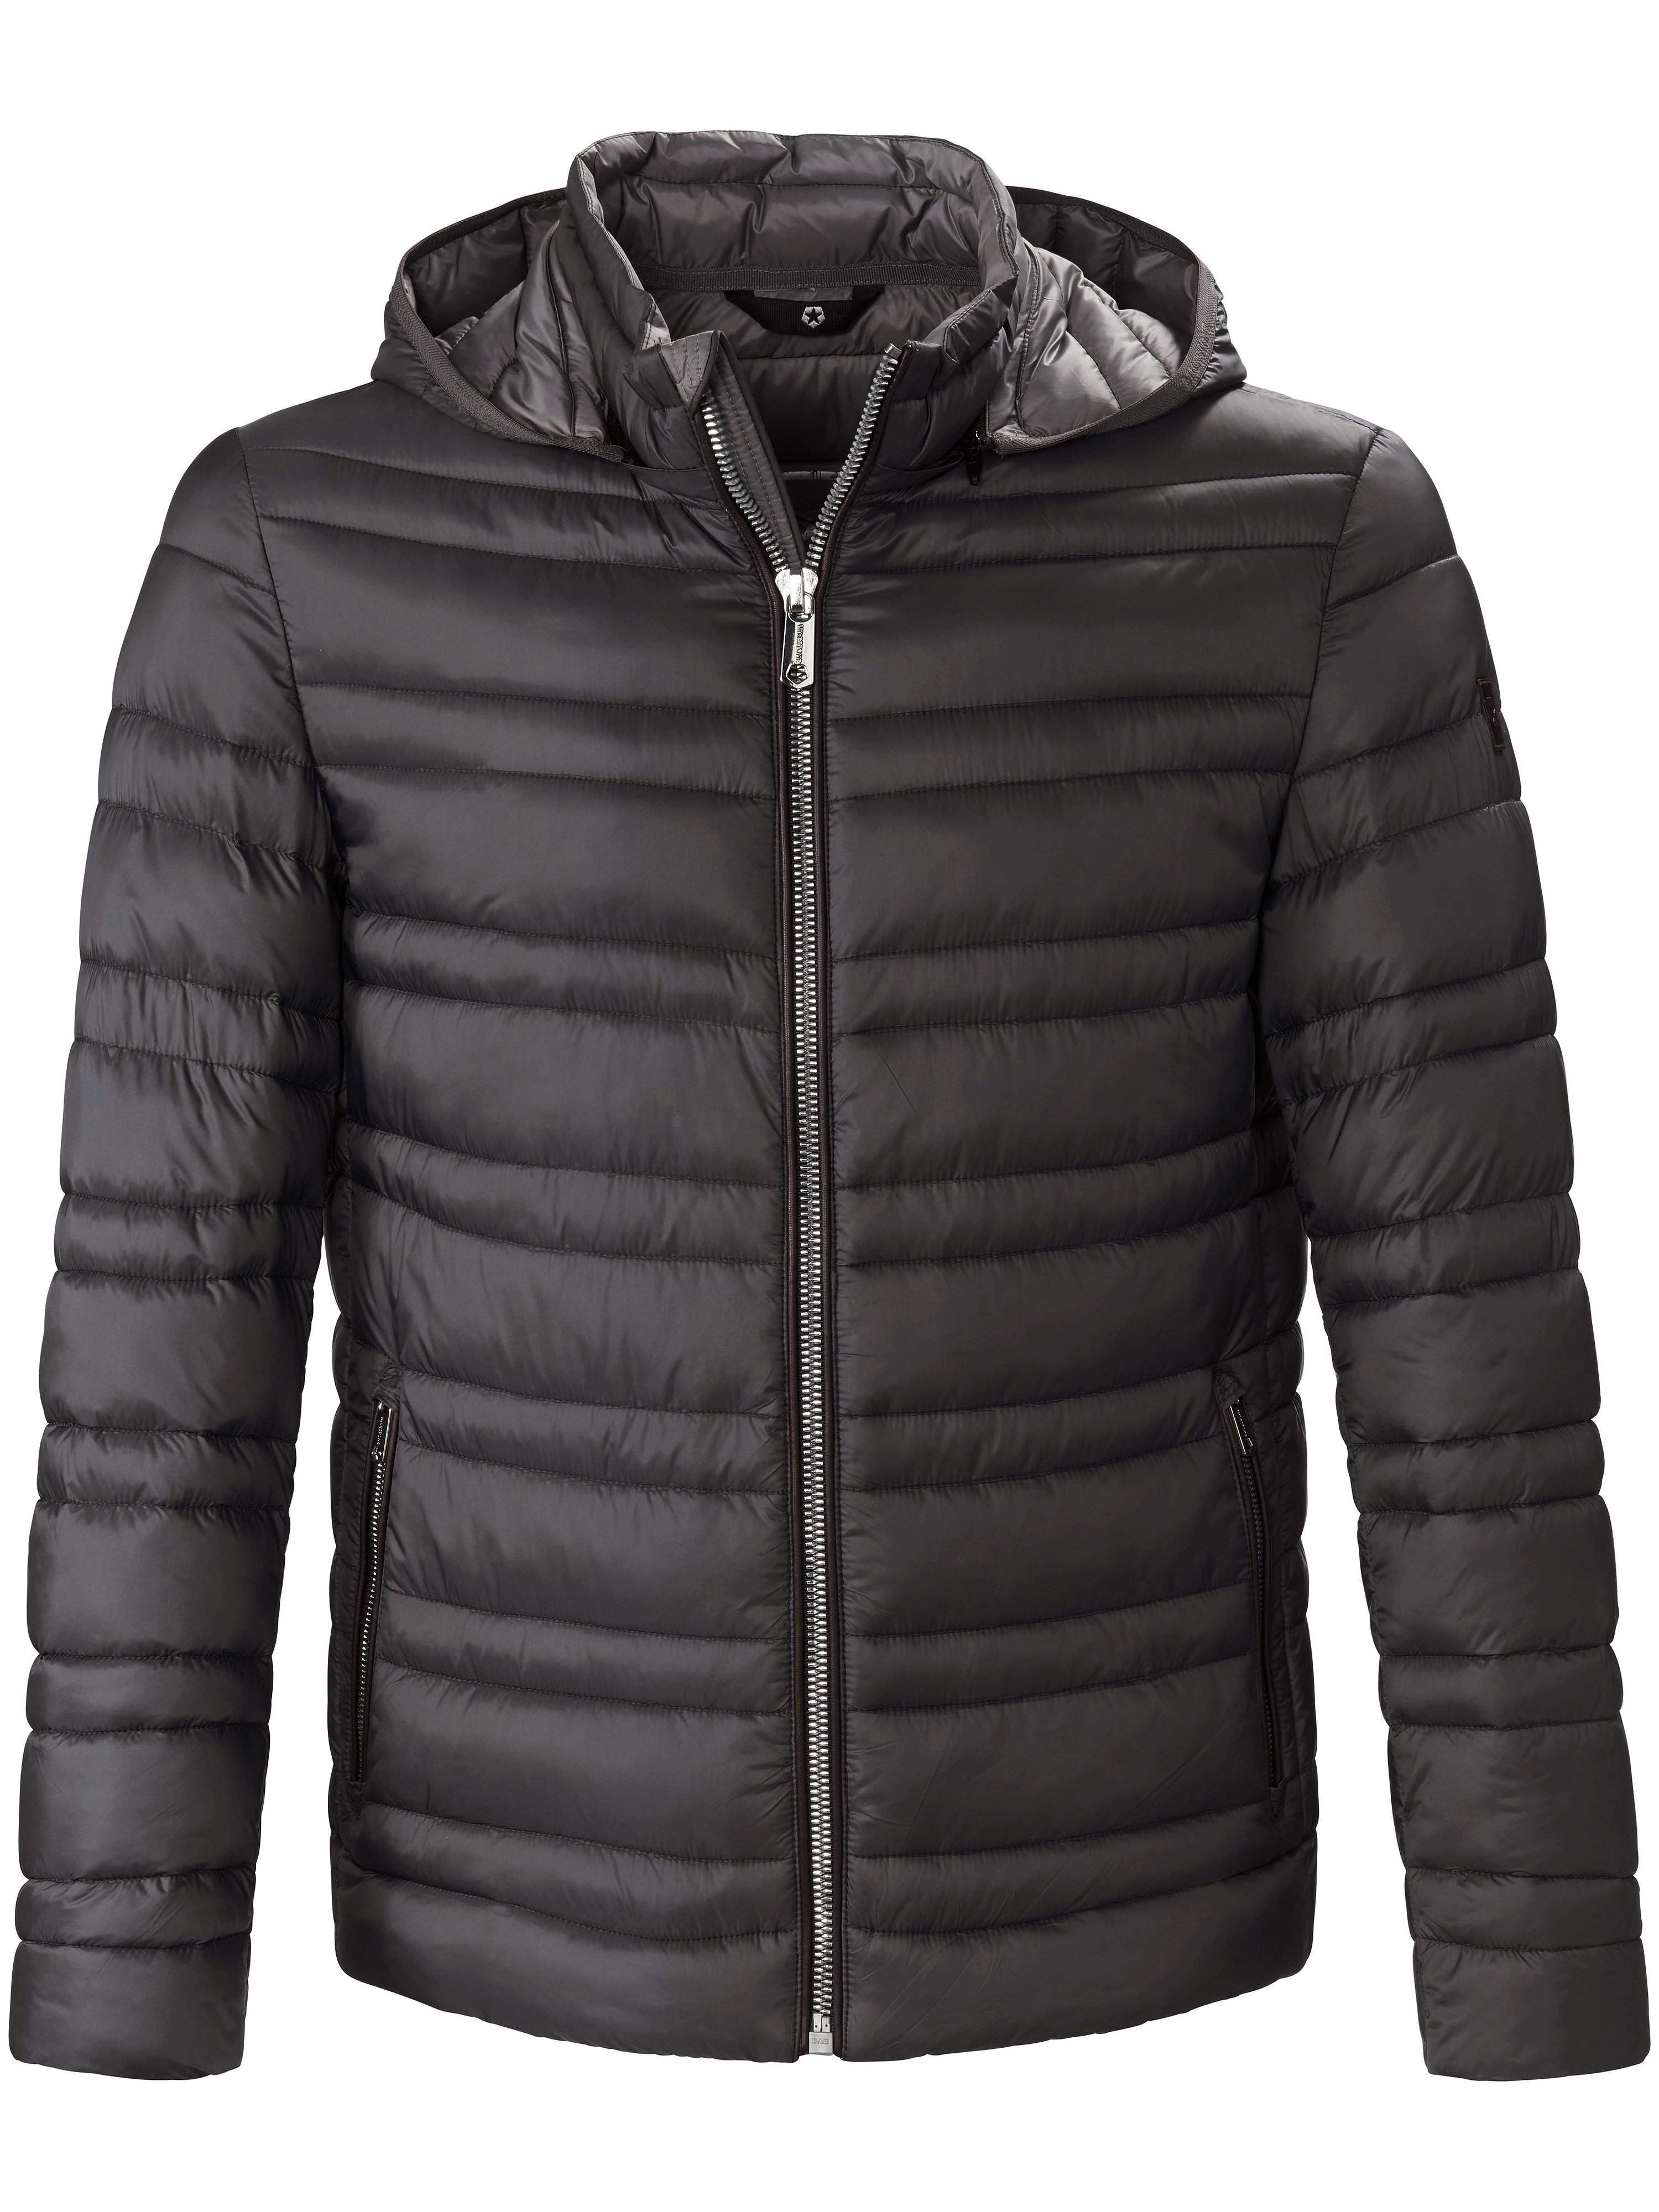 Quilted jacket removable hood Milestone black